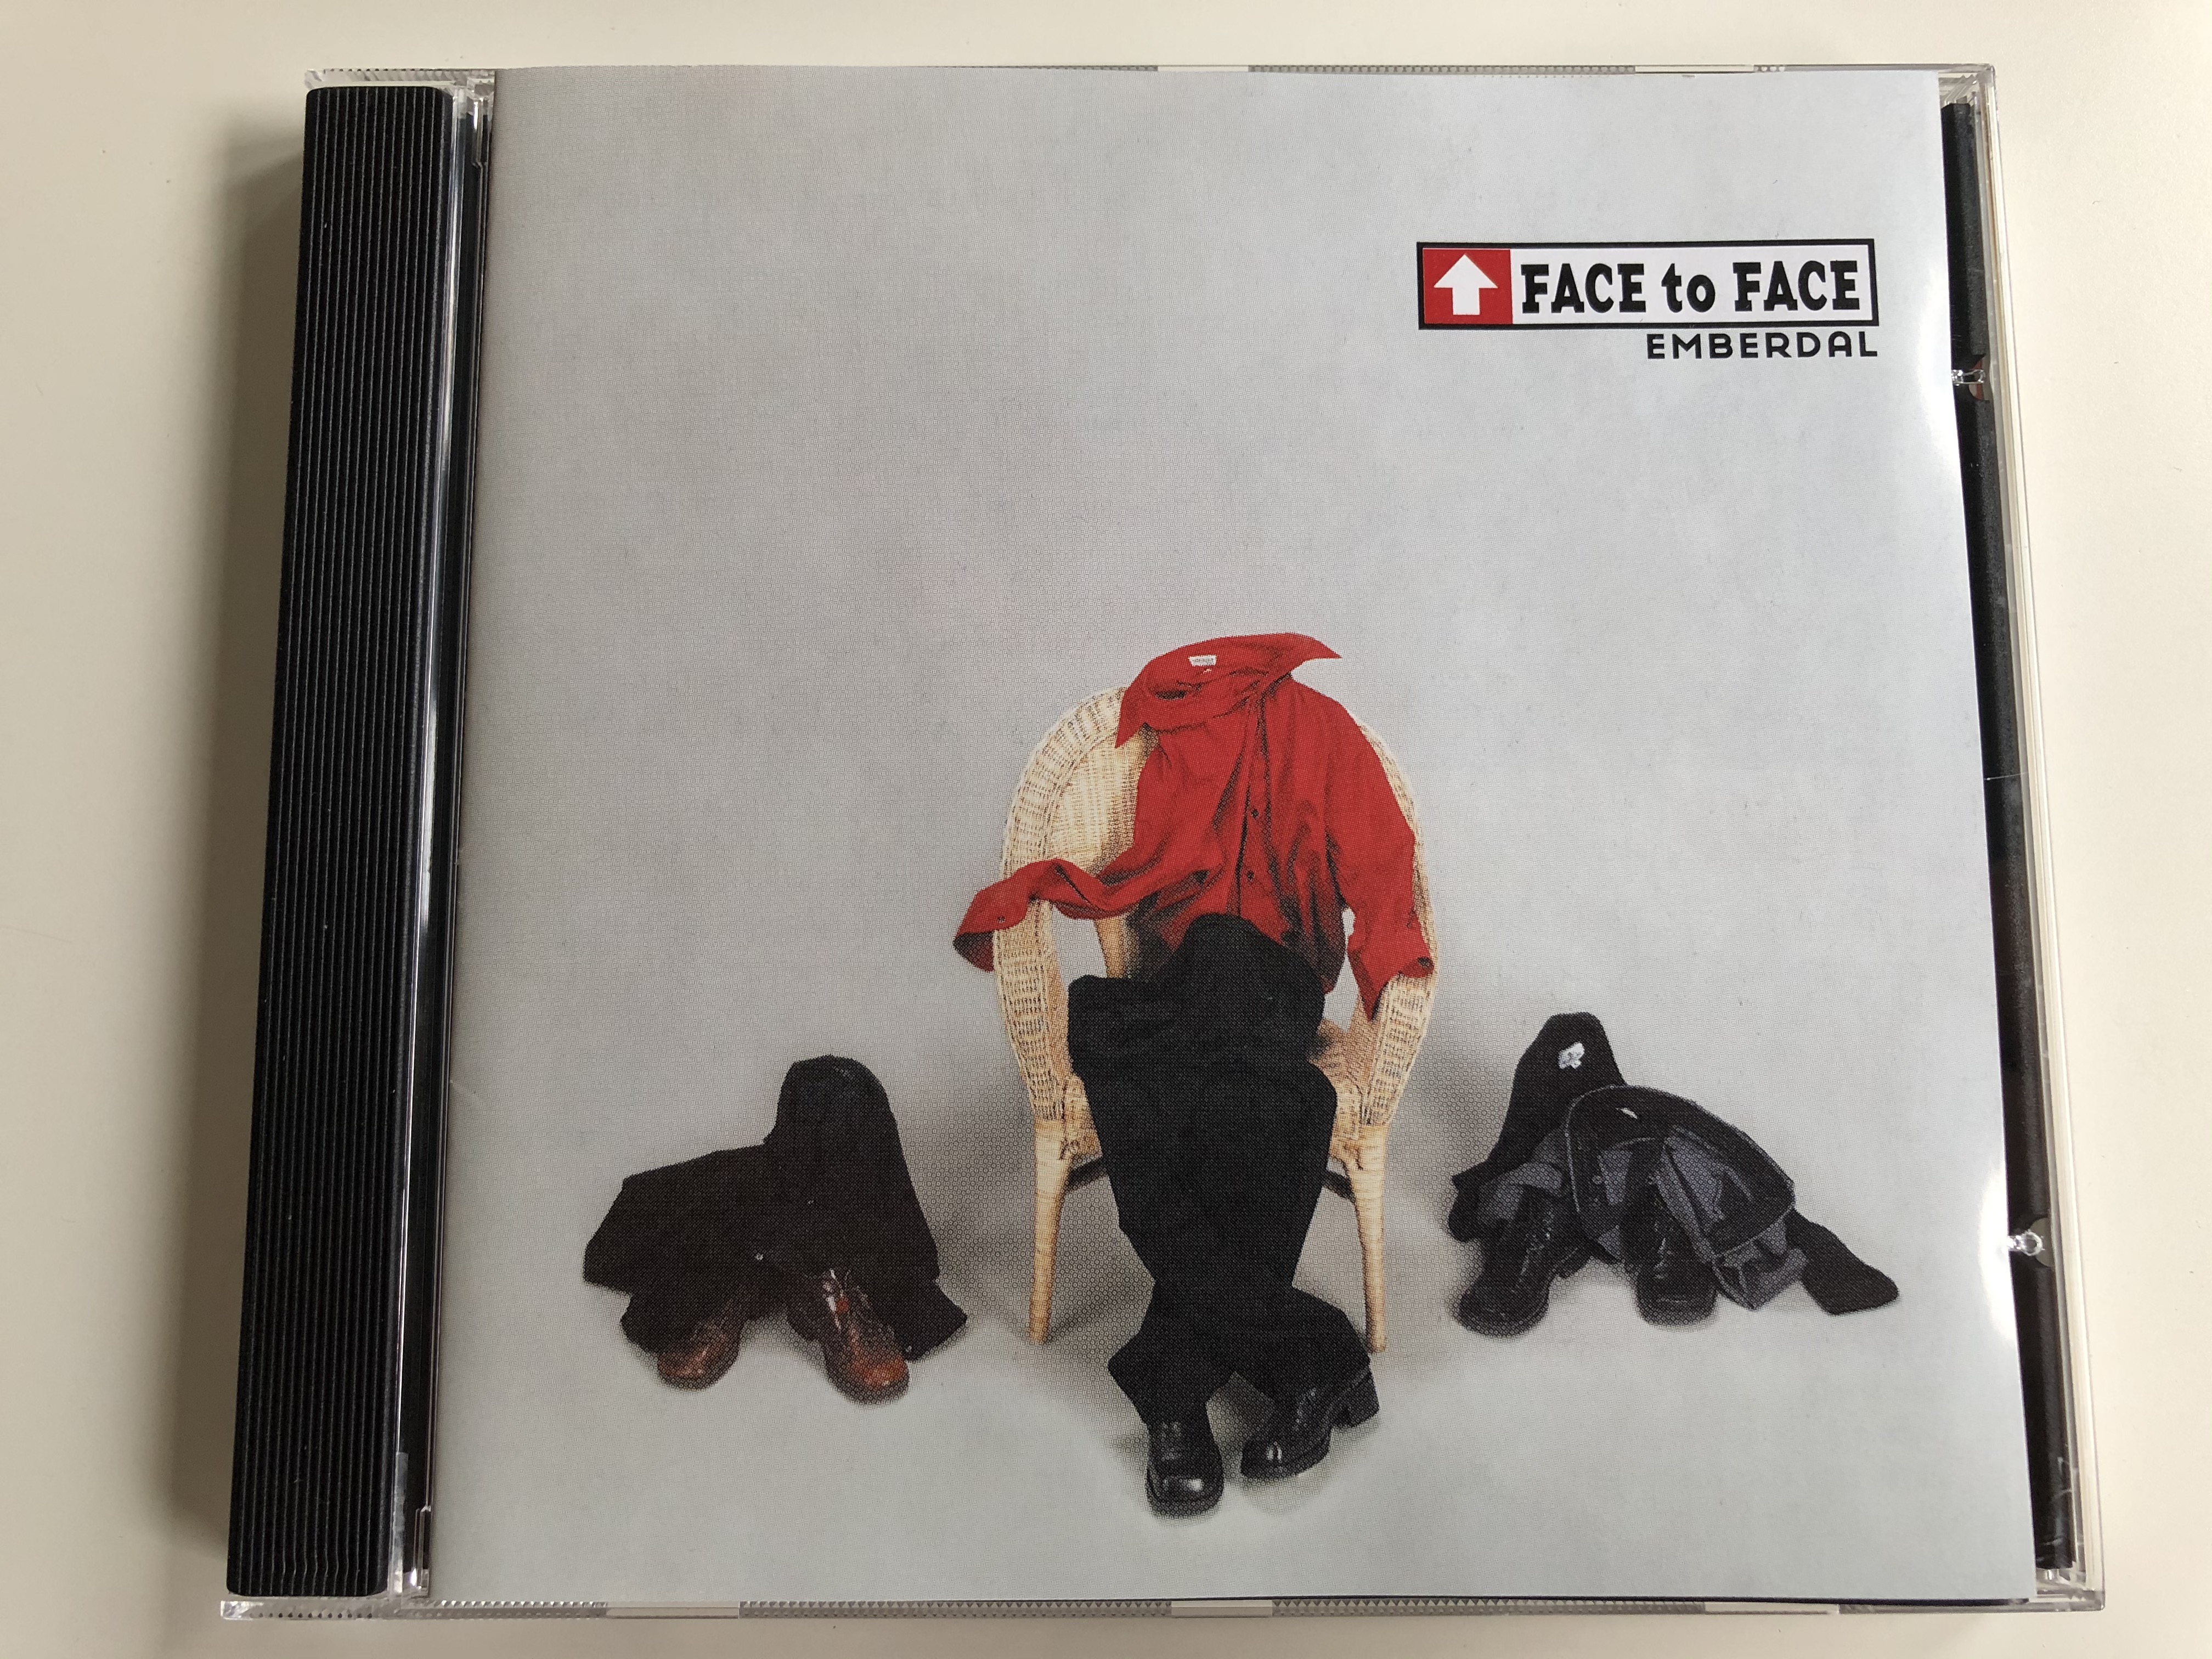 face-to-face-emberdal-audio-cd-2000-face-002-1-.jpg